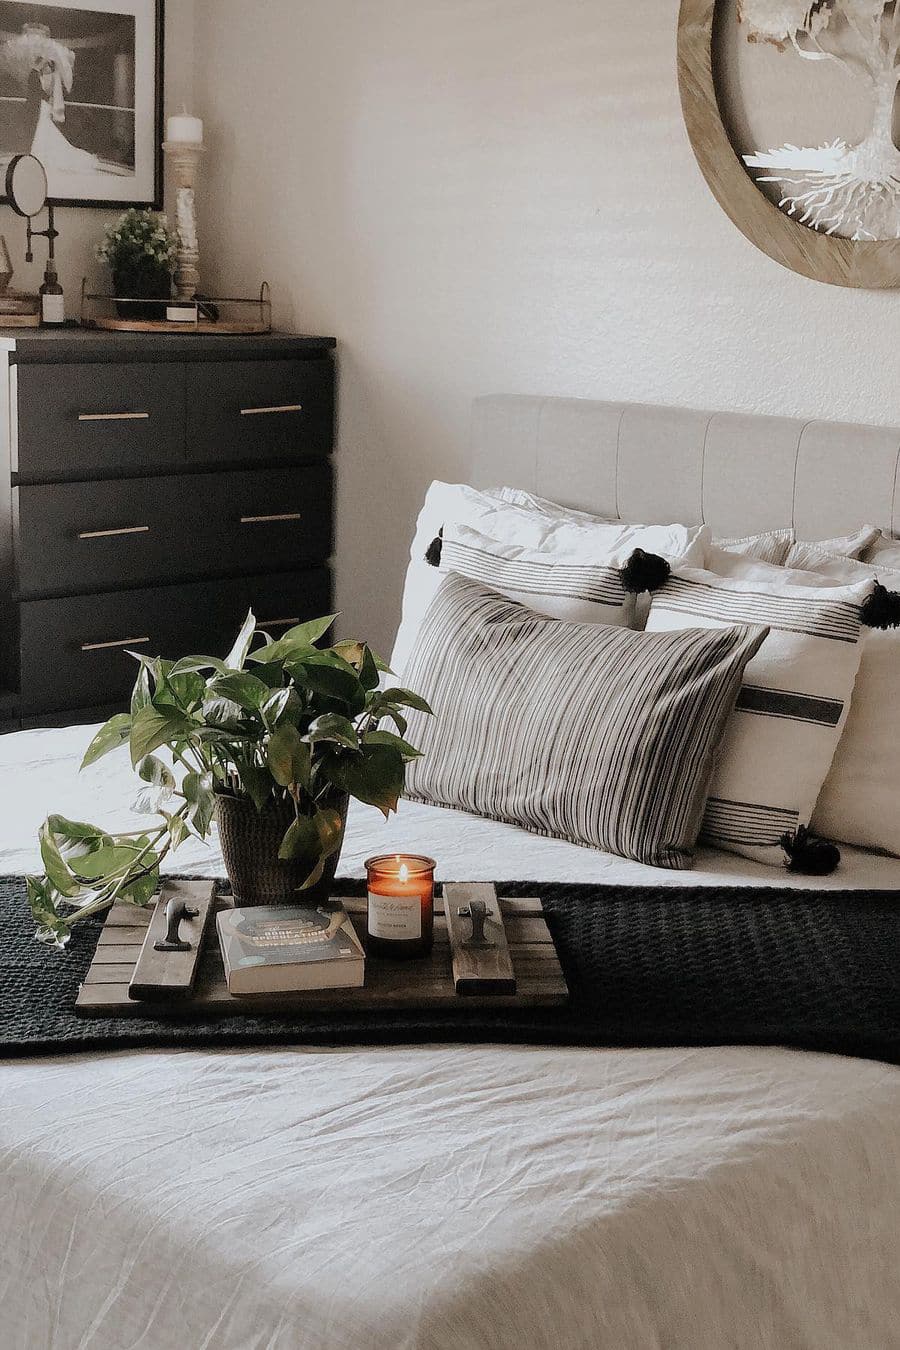 20 Cozy and Unique Small Bedroom Decorating Ideas